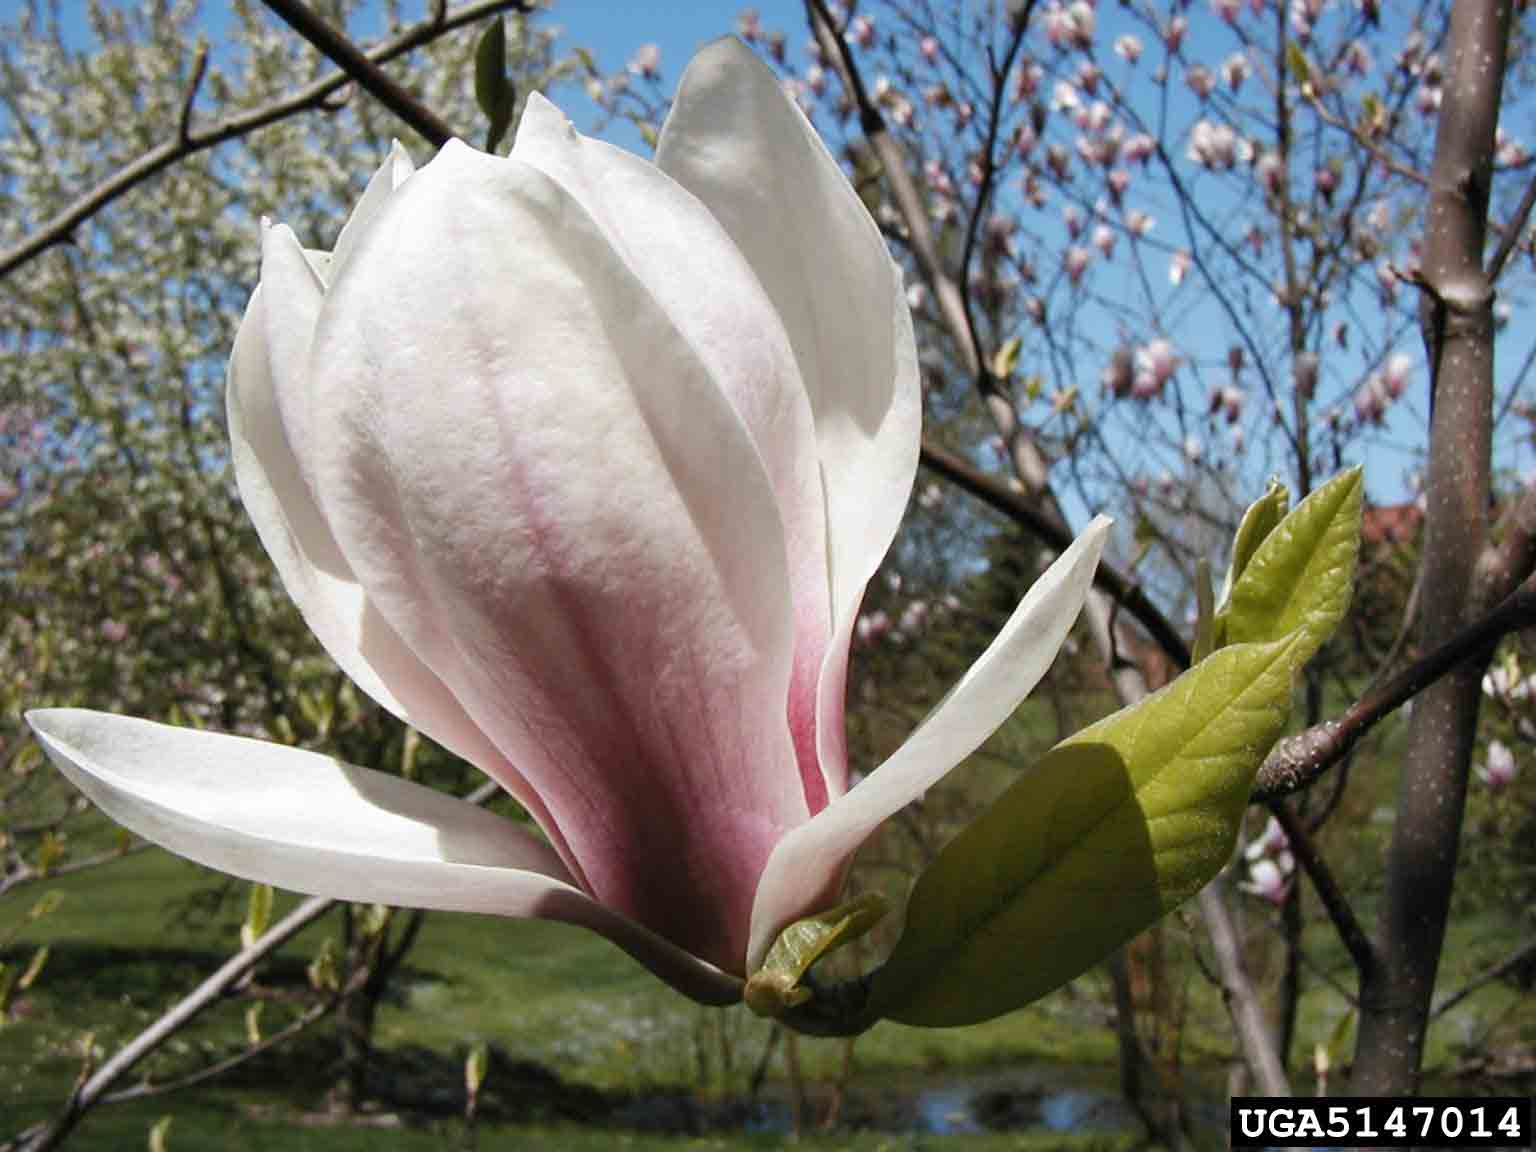 Saucer magnolia flower